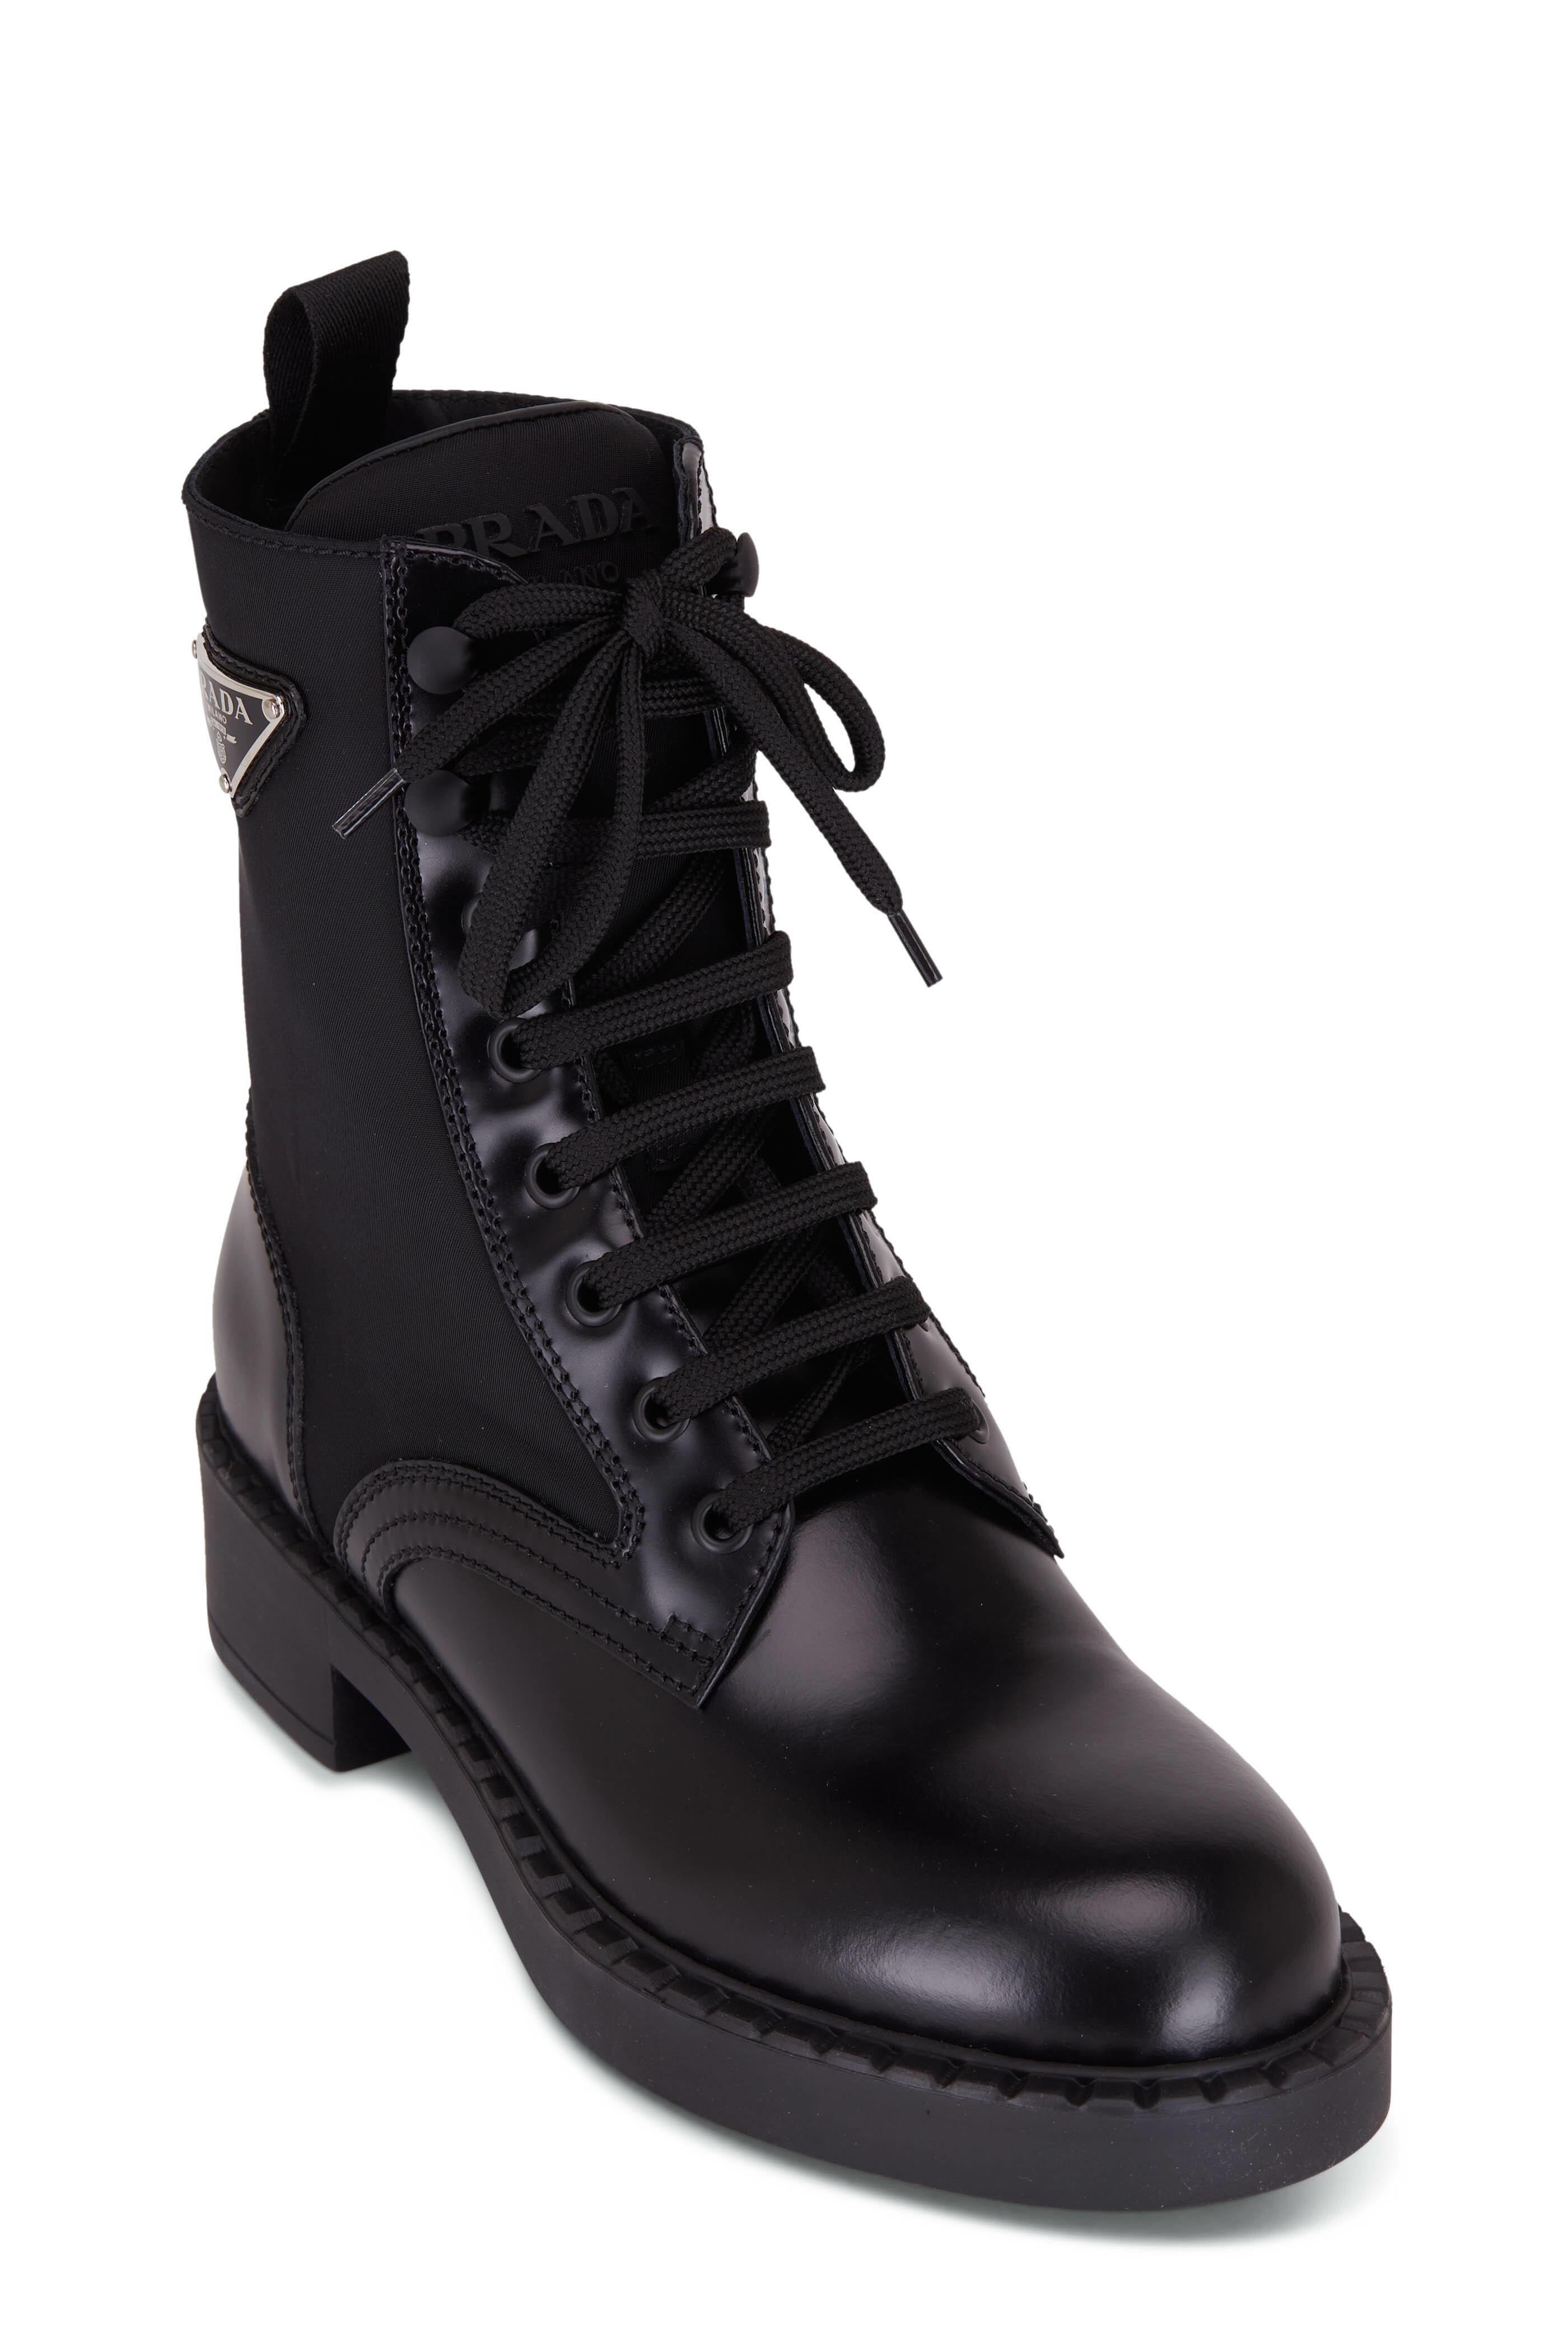 Prada - Black Leather & Nylon Boot, 50mm | Mitchell Stores